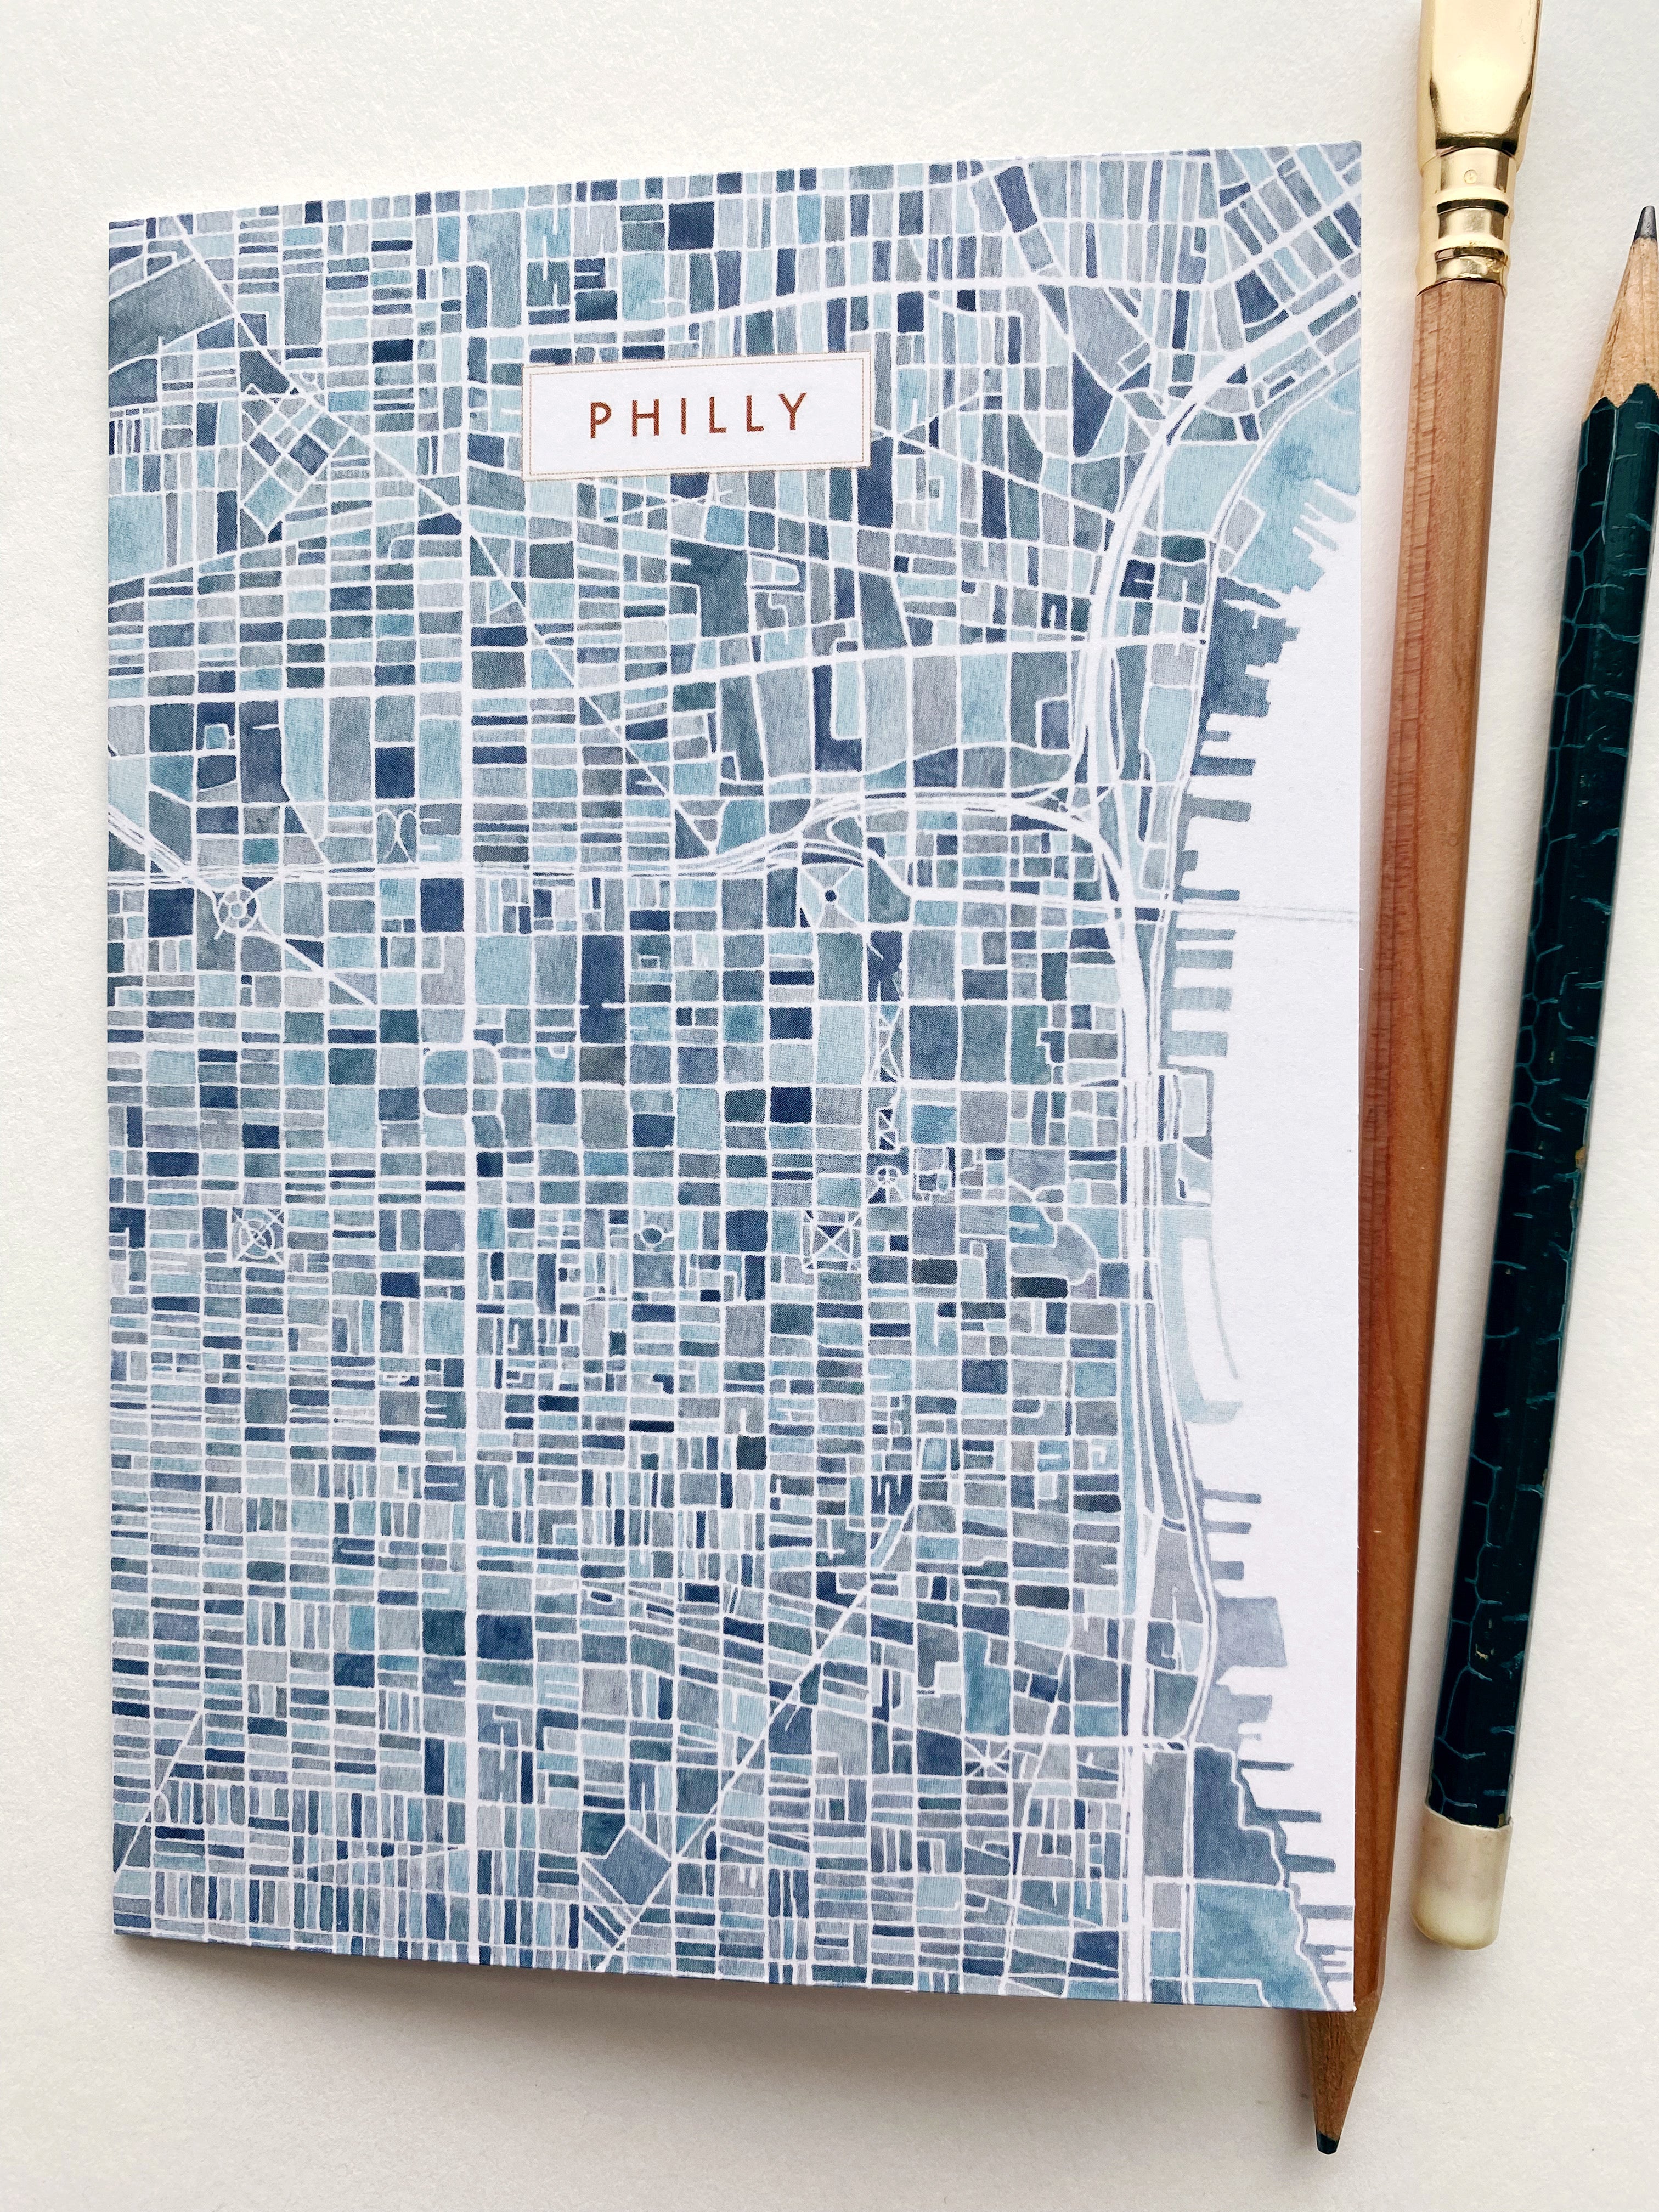 PHILLY Philadelphia Pennsylvania Watercolor Map - city nickname greeting card